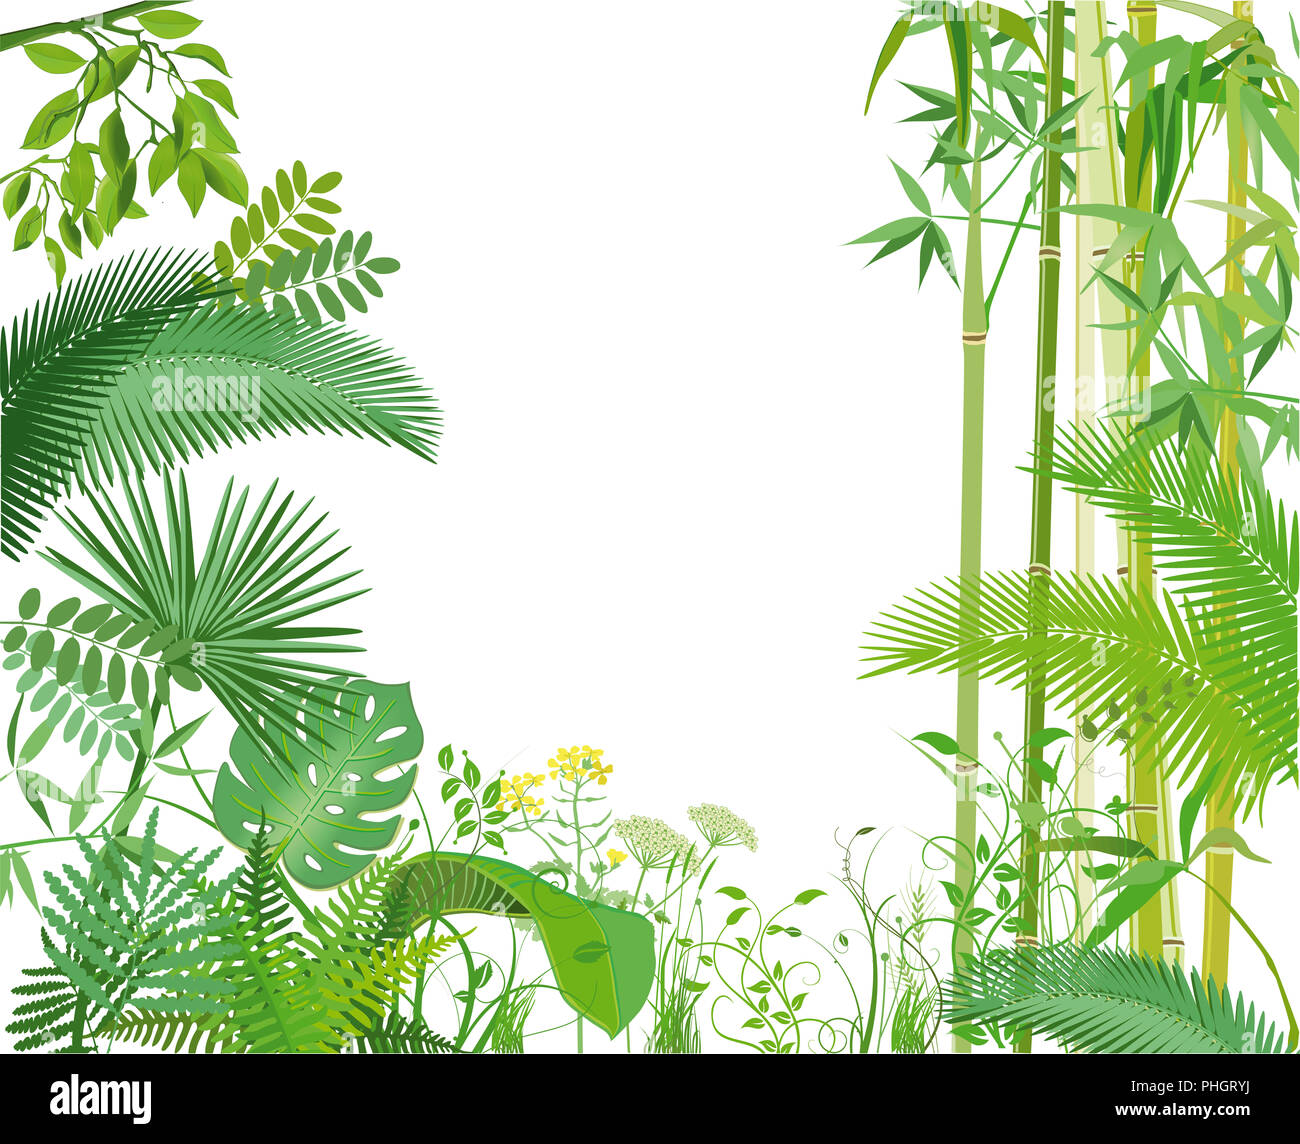 Exotic plants banner, illustration Stock Photo